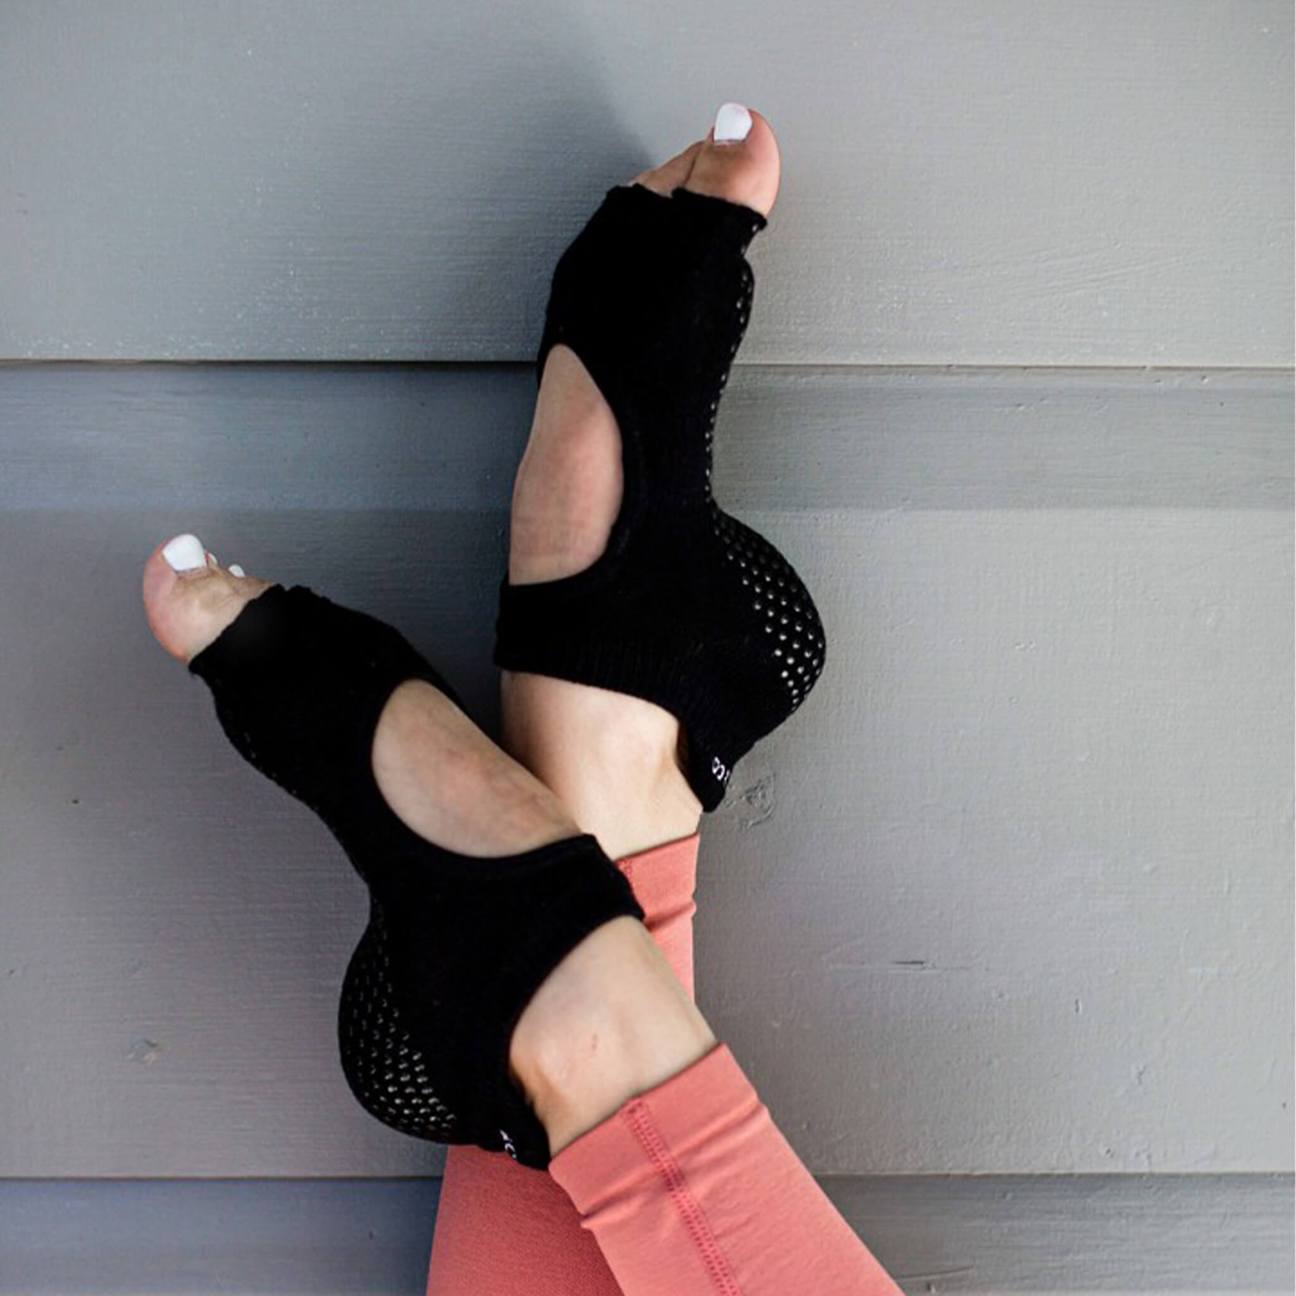 Toesox Women's Ankle Half Toe Grip, Heather Grey, Small, Socks -   Canada